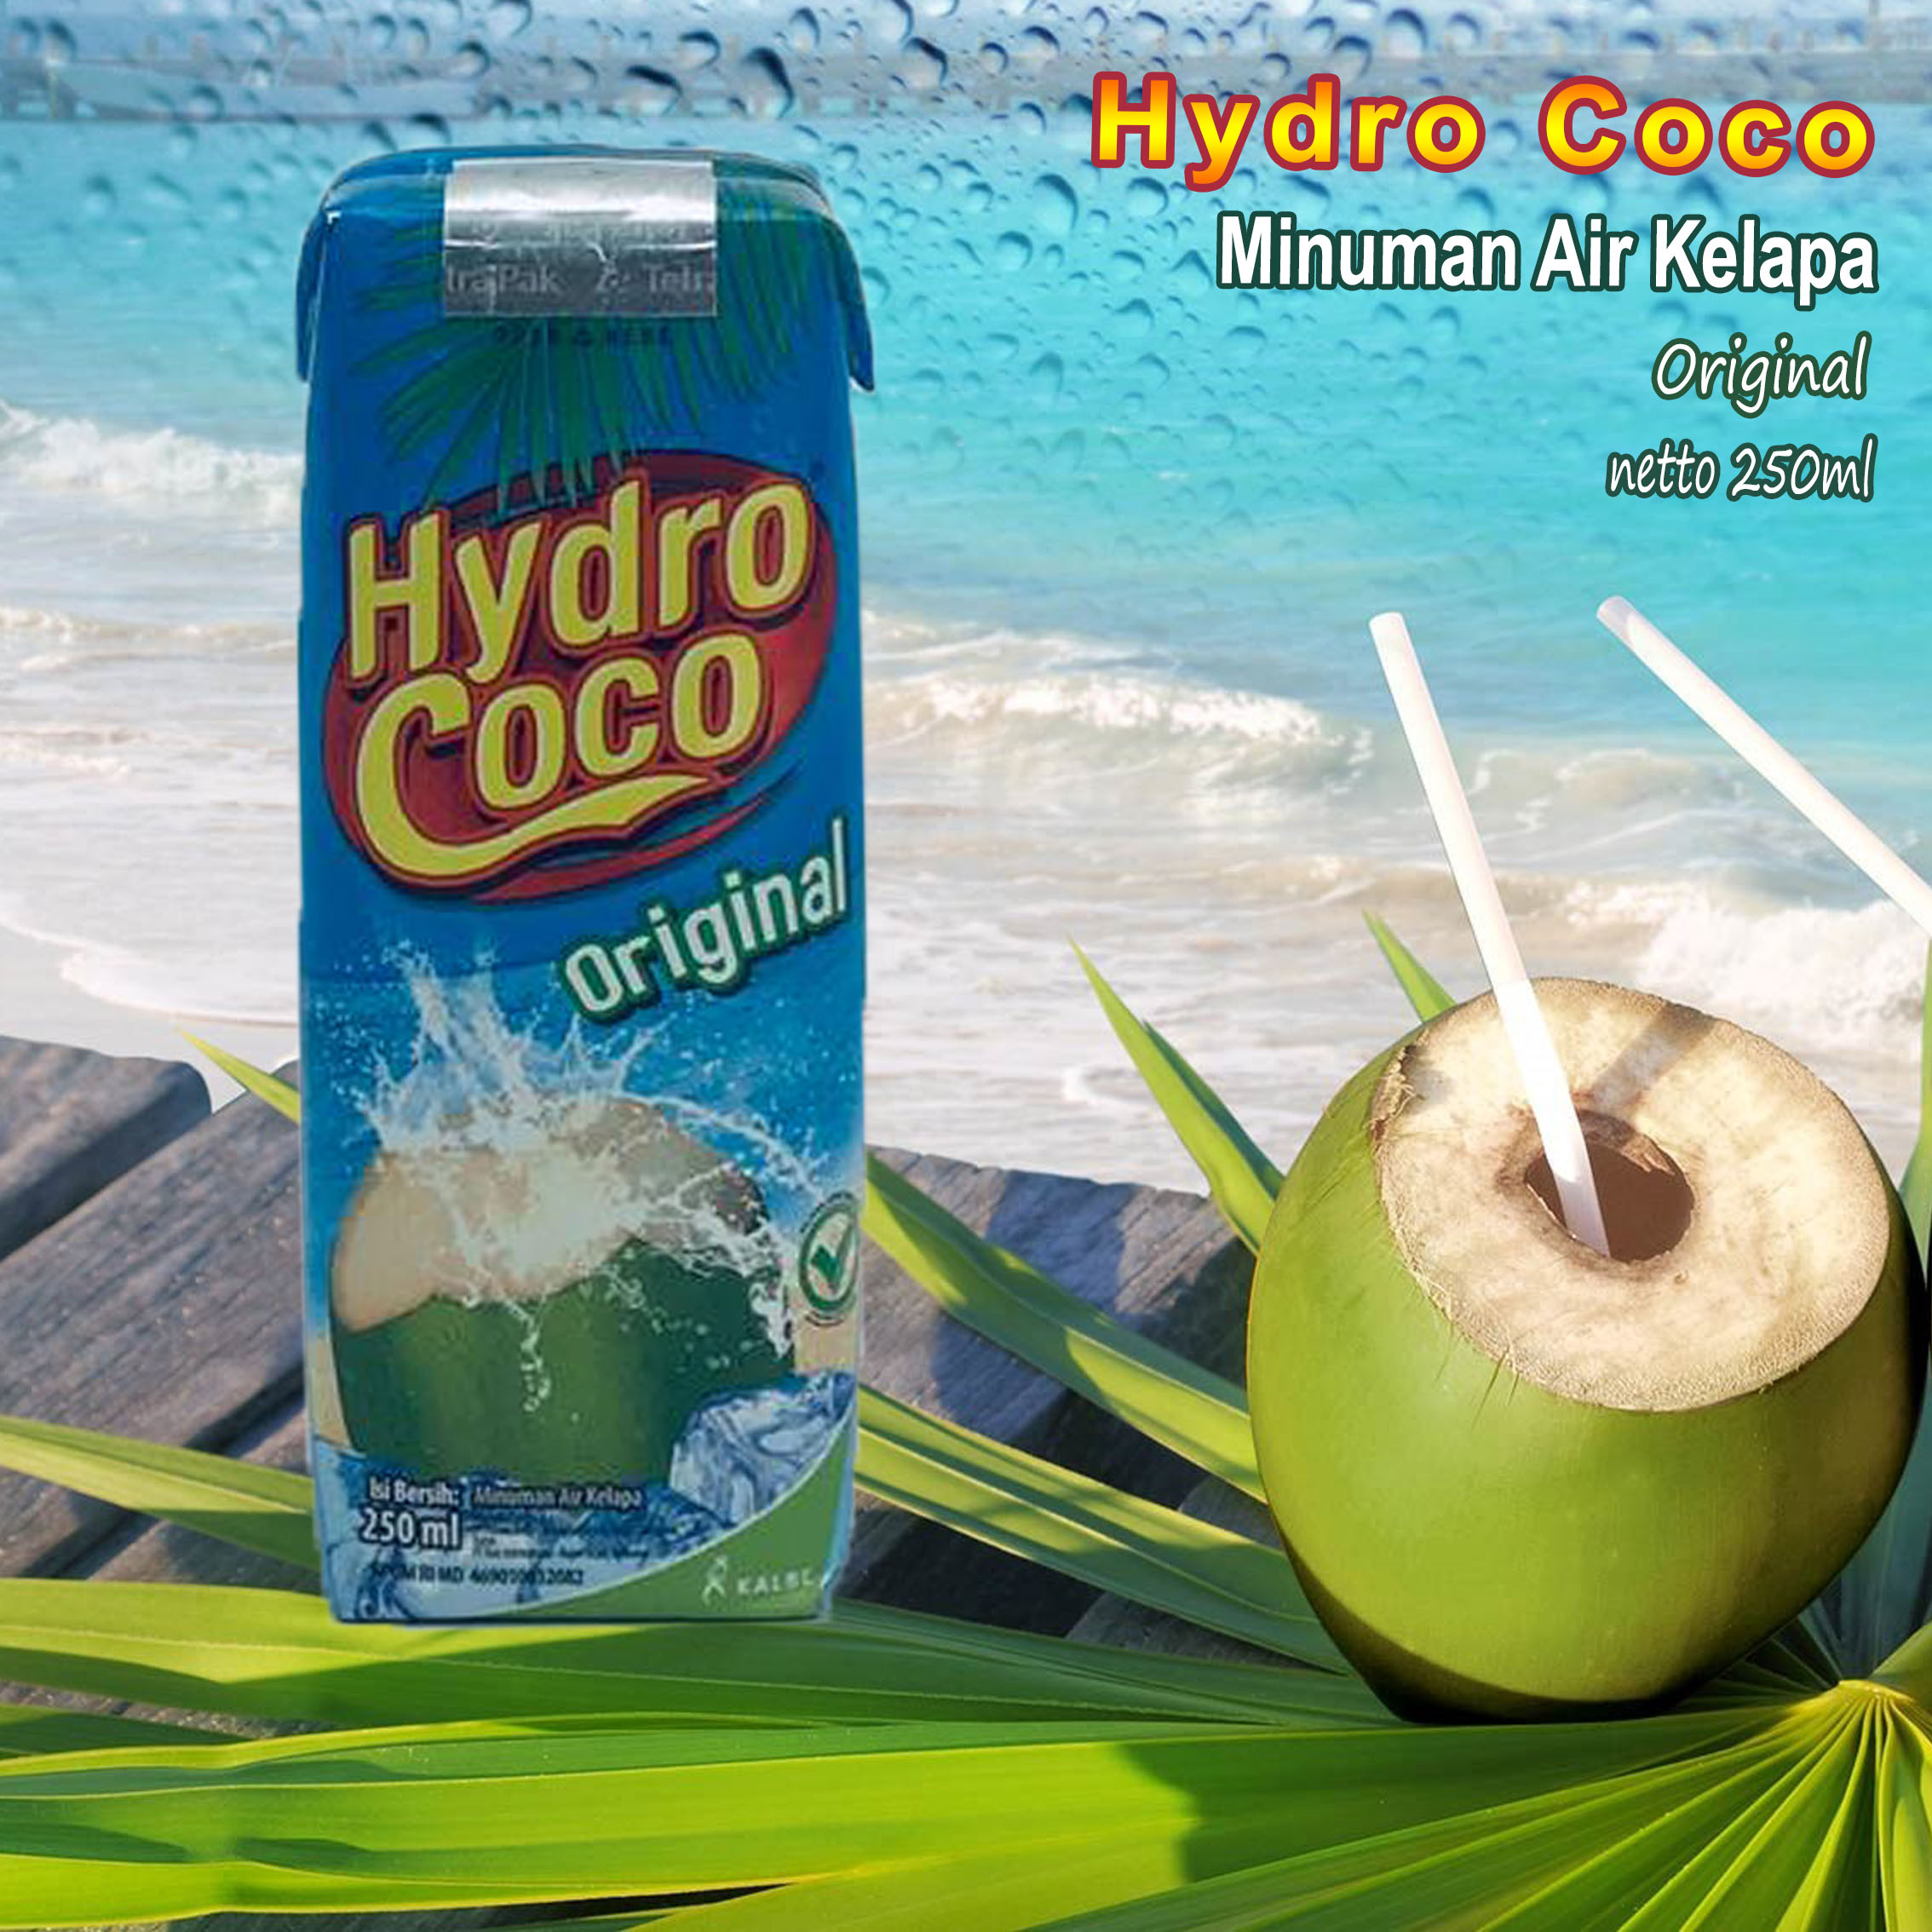 Hydro Coco Minuman Air Kelapa Original 250ml Lazada Indonesia 6696